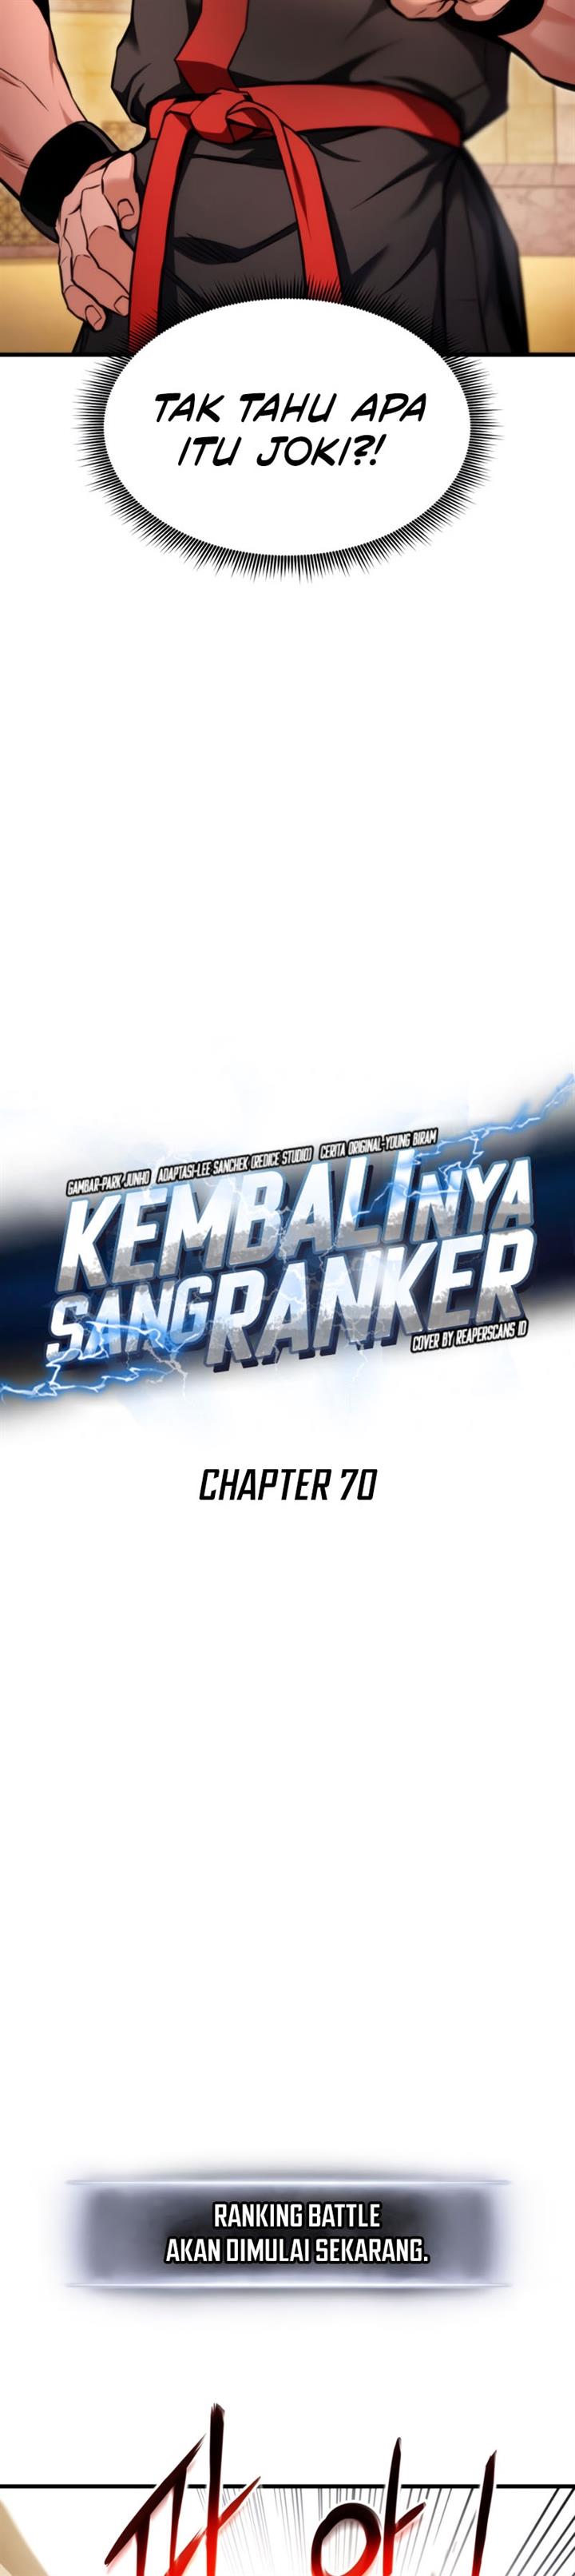 Ranker’s Return (Remake) Chapter 70